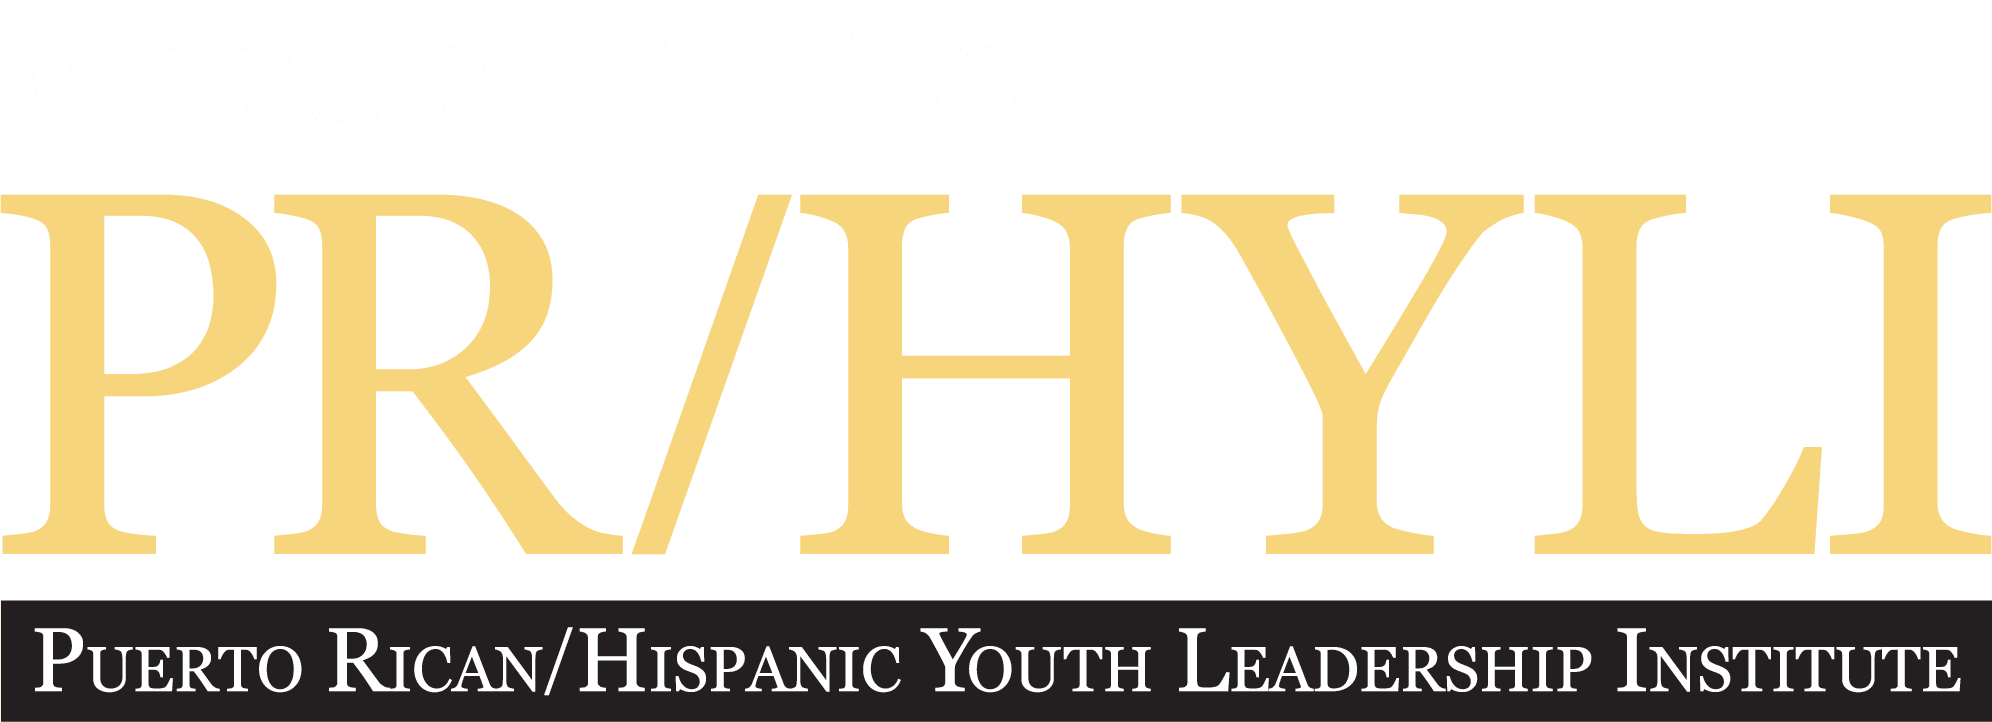 Angelo Del Toro Puerto Rican/Hispanic Youth Leadership Institute